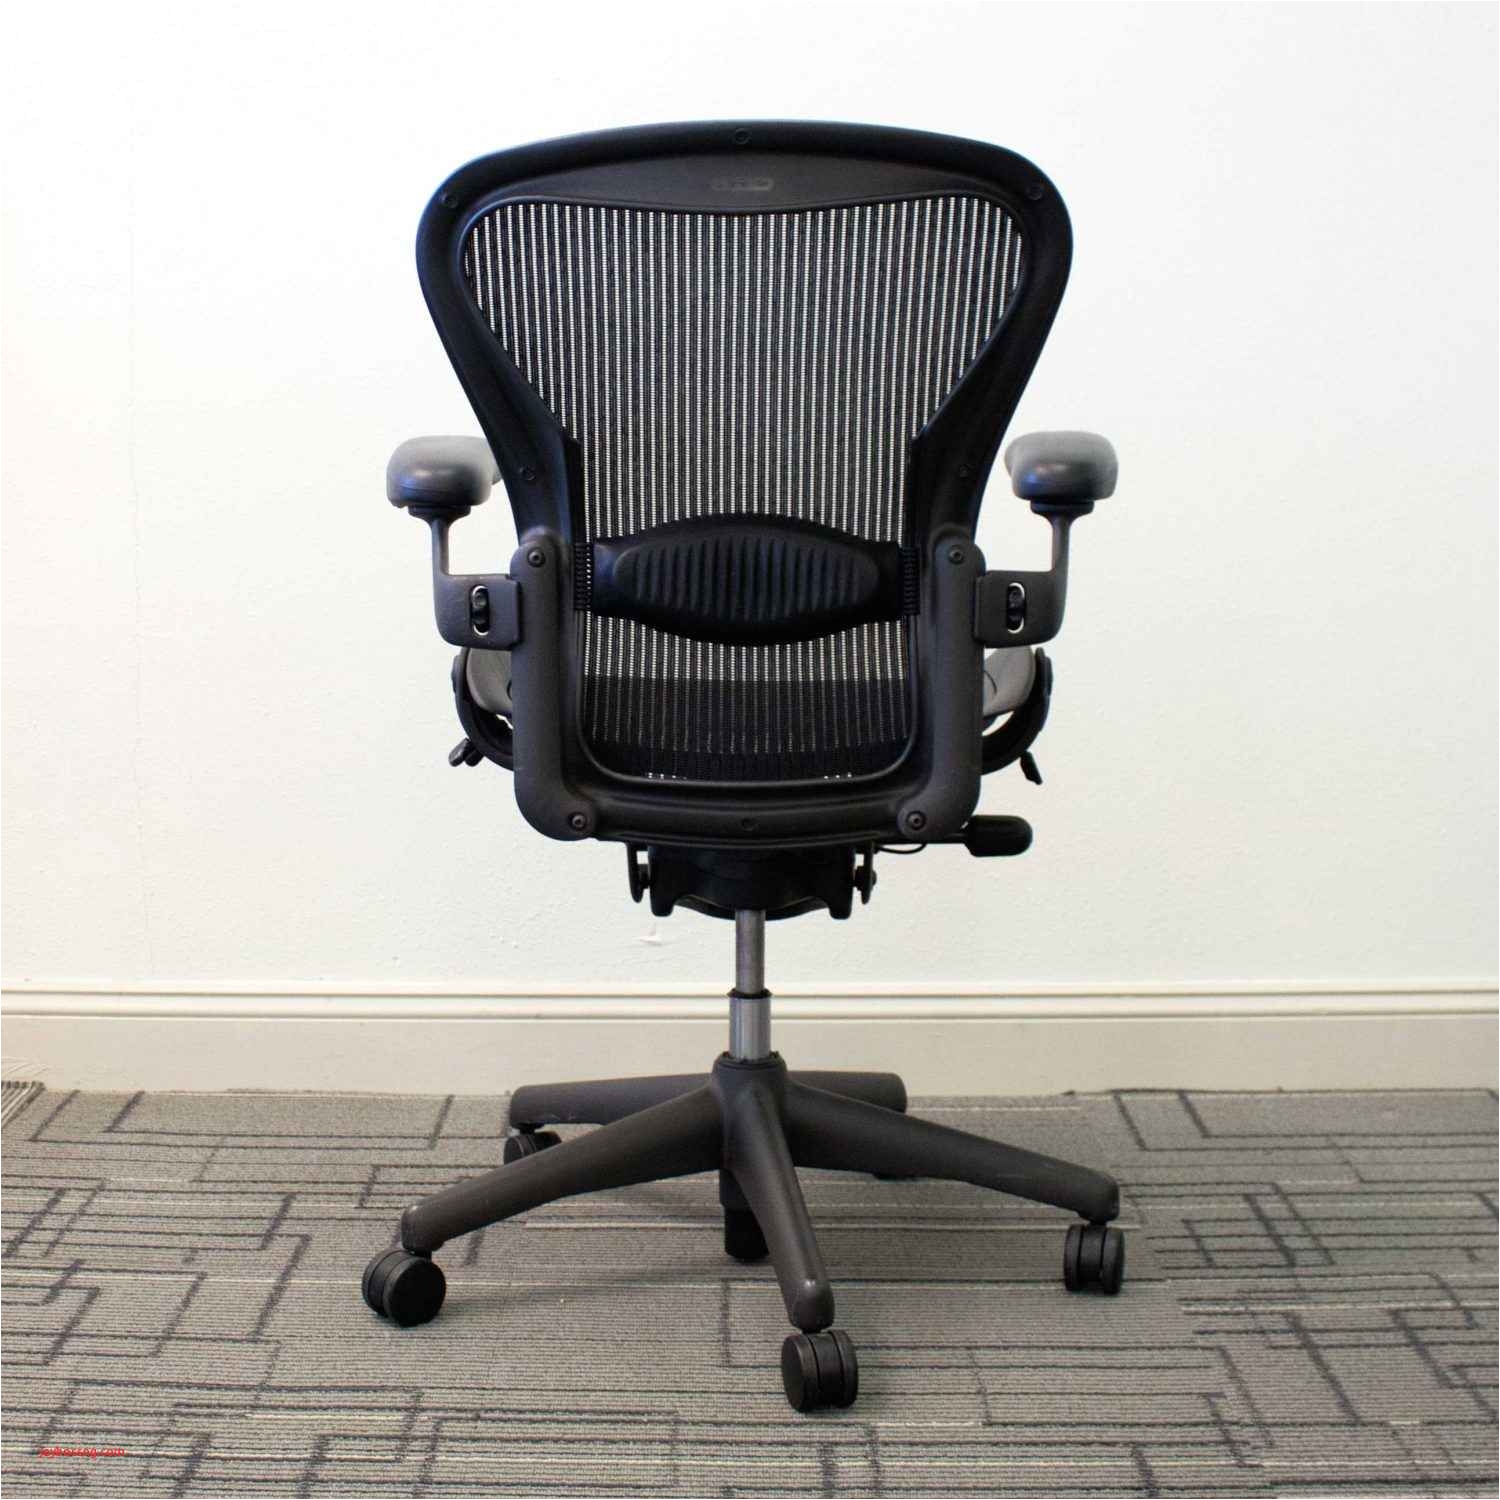 Herman Miller Classic Aeron Chair Sizes Aeron Chair Sizes Created Used Herman Miller Aeron Chairs Size B